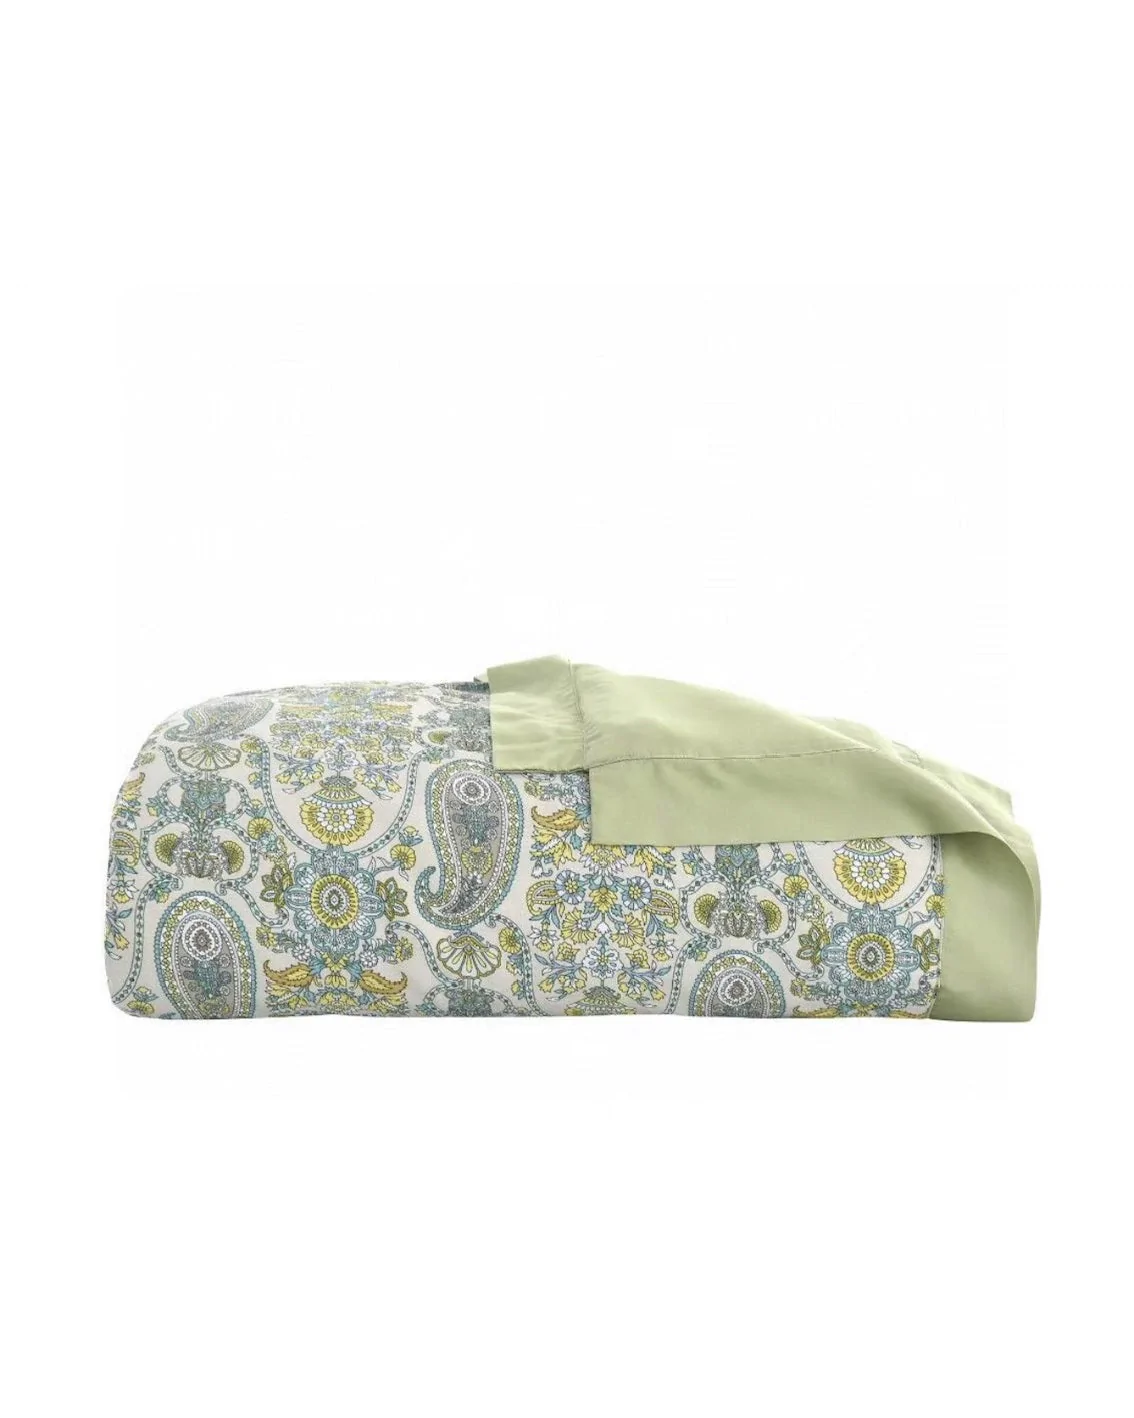 Ralph Lauren Home Paisley Series Cool Comforter In Soft Green Multi